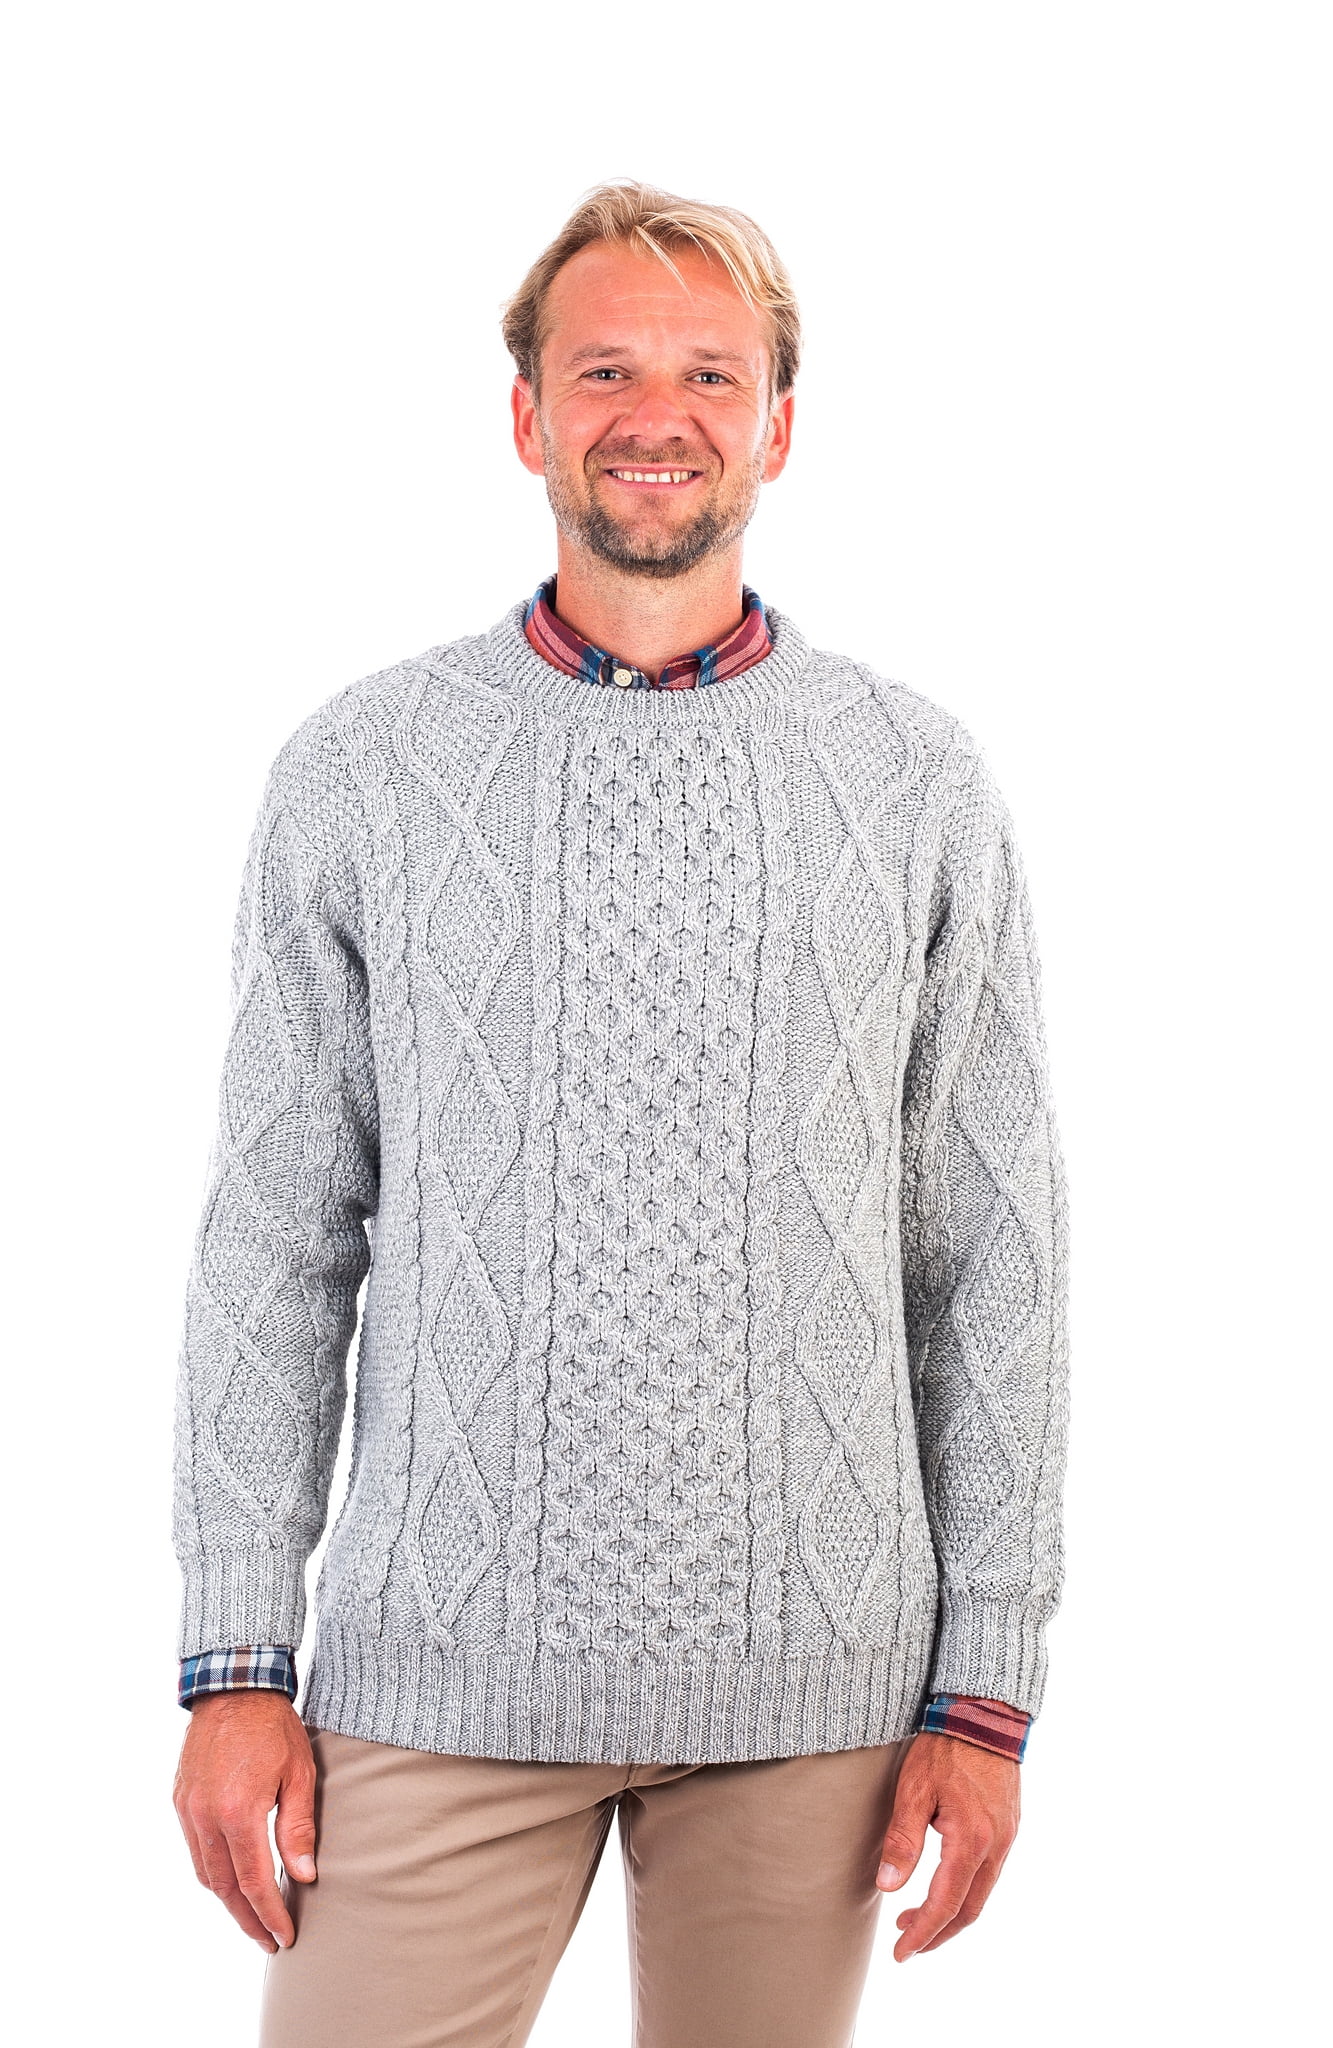 SAOL - SAOL Irish Sweater for Men Cable Knit Fisherman Aran Pullover ...